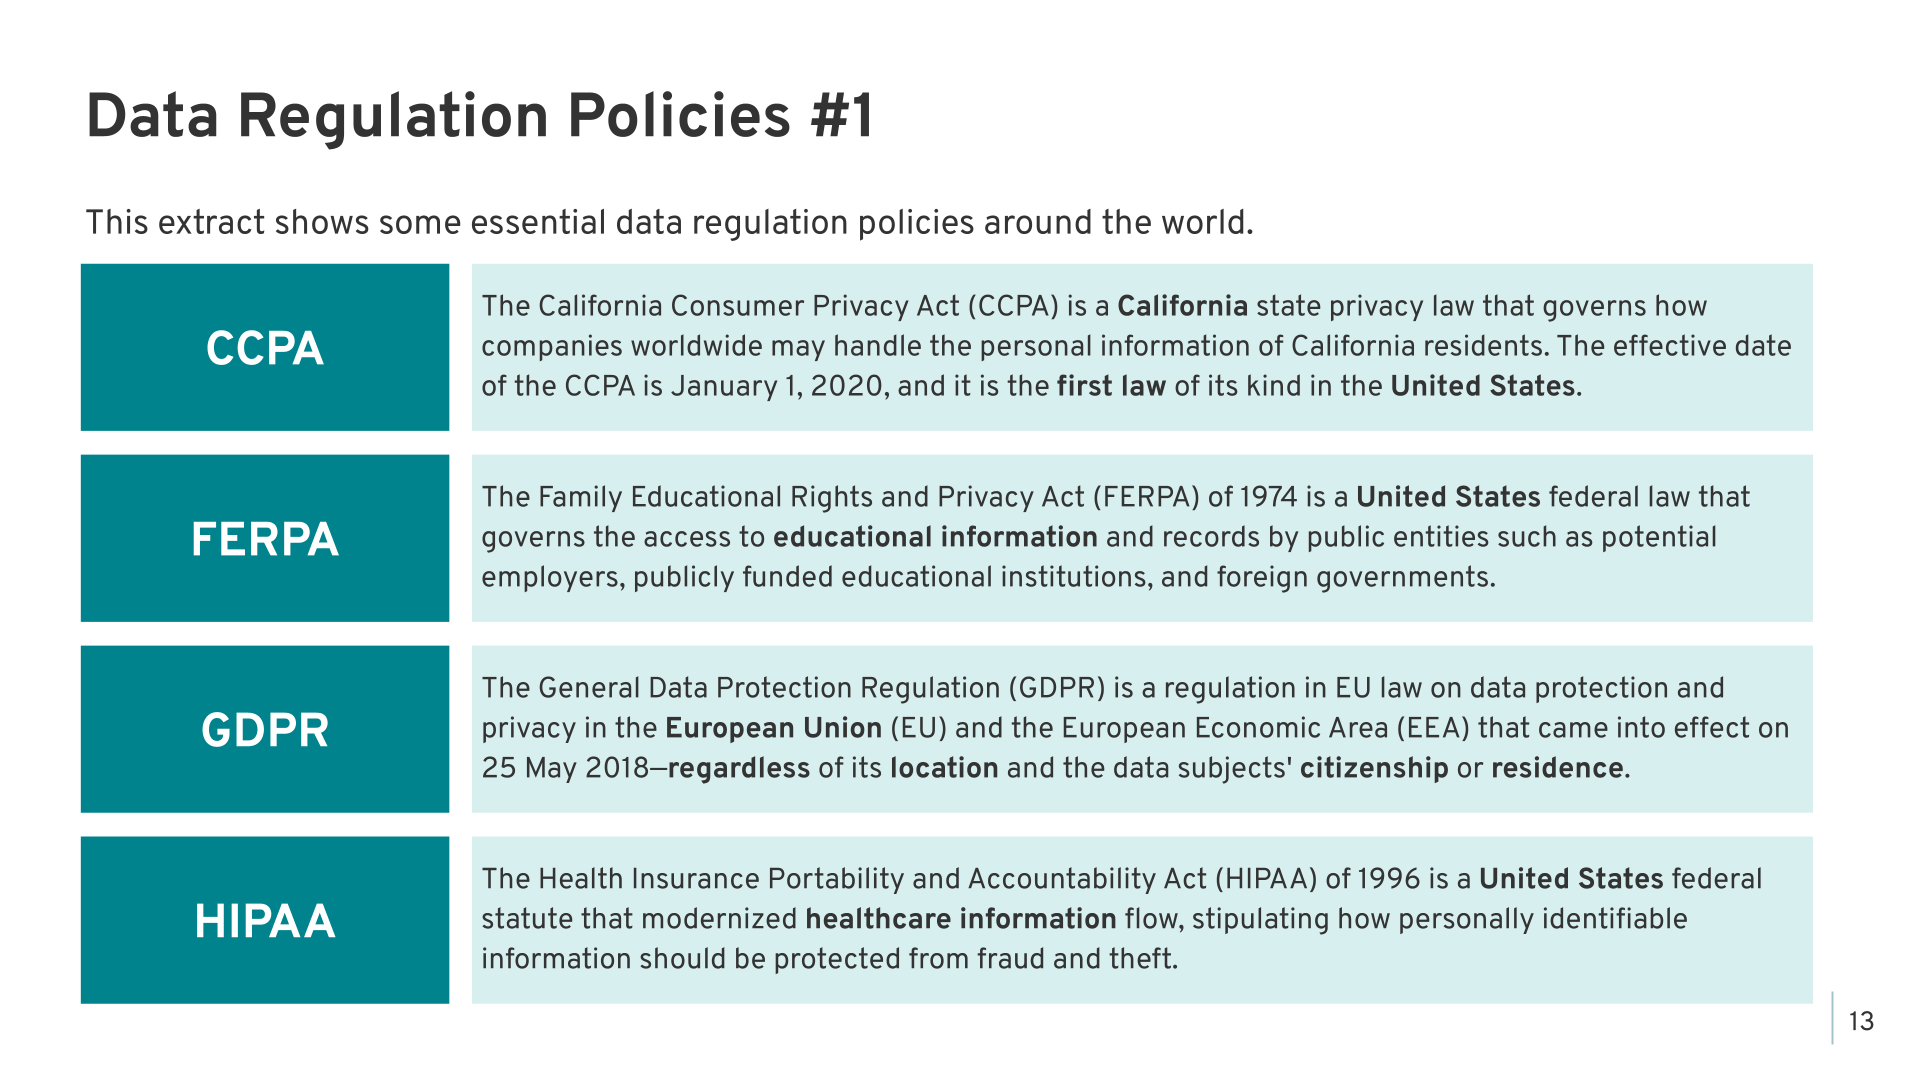 PII, Personal Data, and Regulations - Slide 13